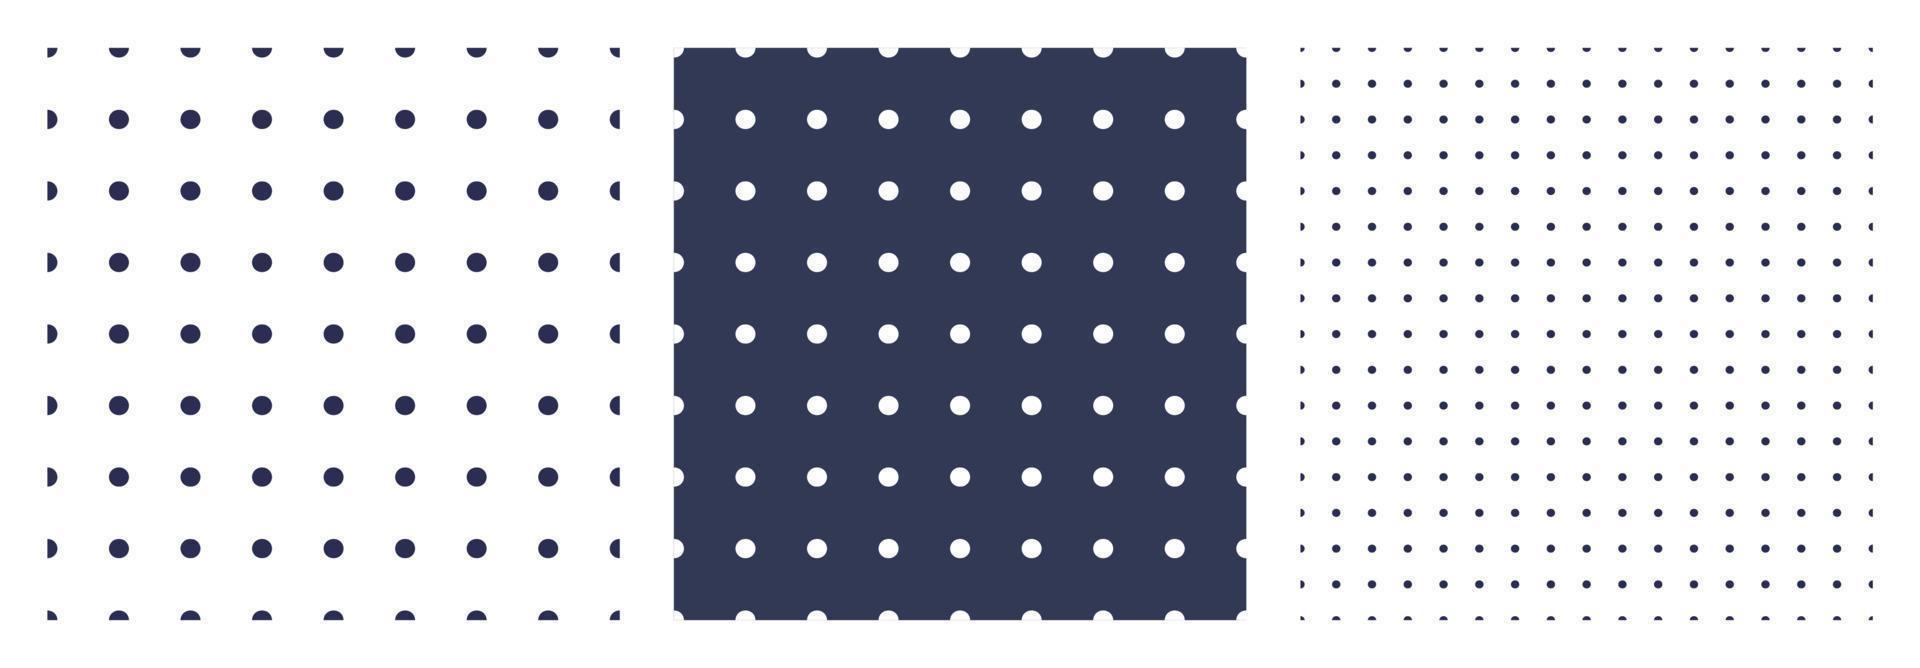 reeks van polka dots of kogel logboek textuur. naadloos monochroom patroon. stippel achtergrond. zacht abstract meetkundig patroon. vector